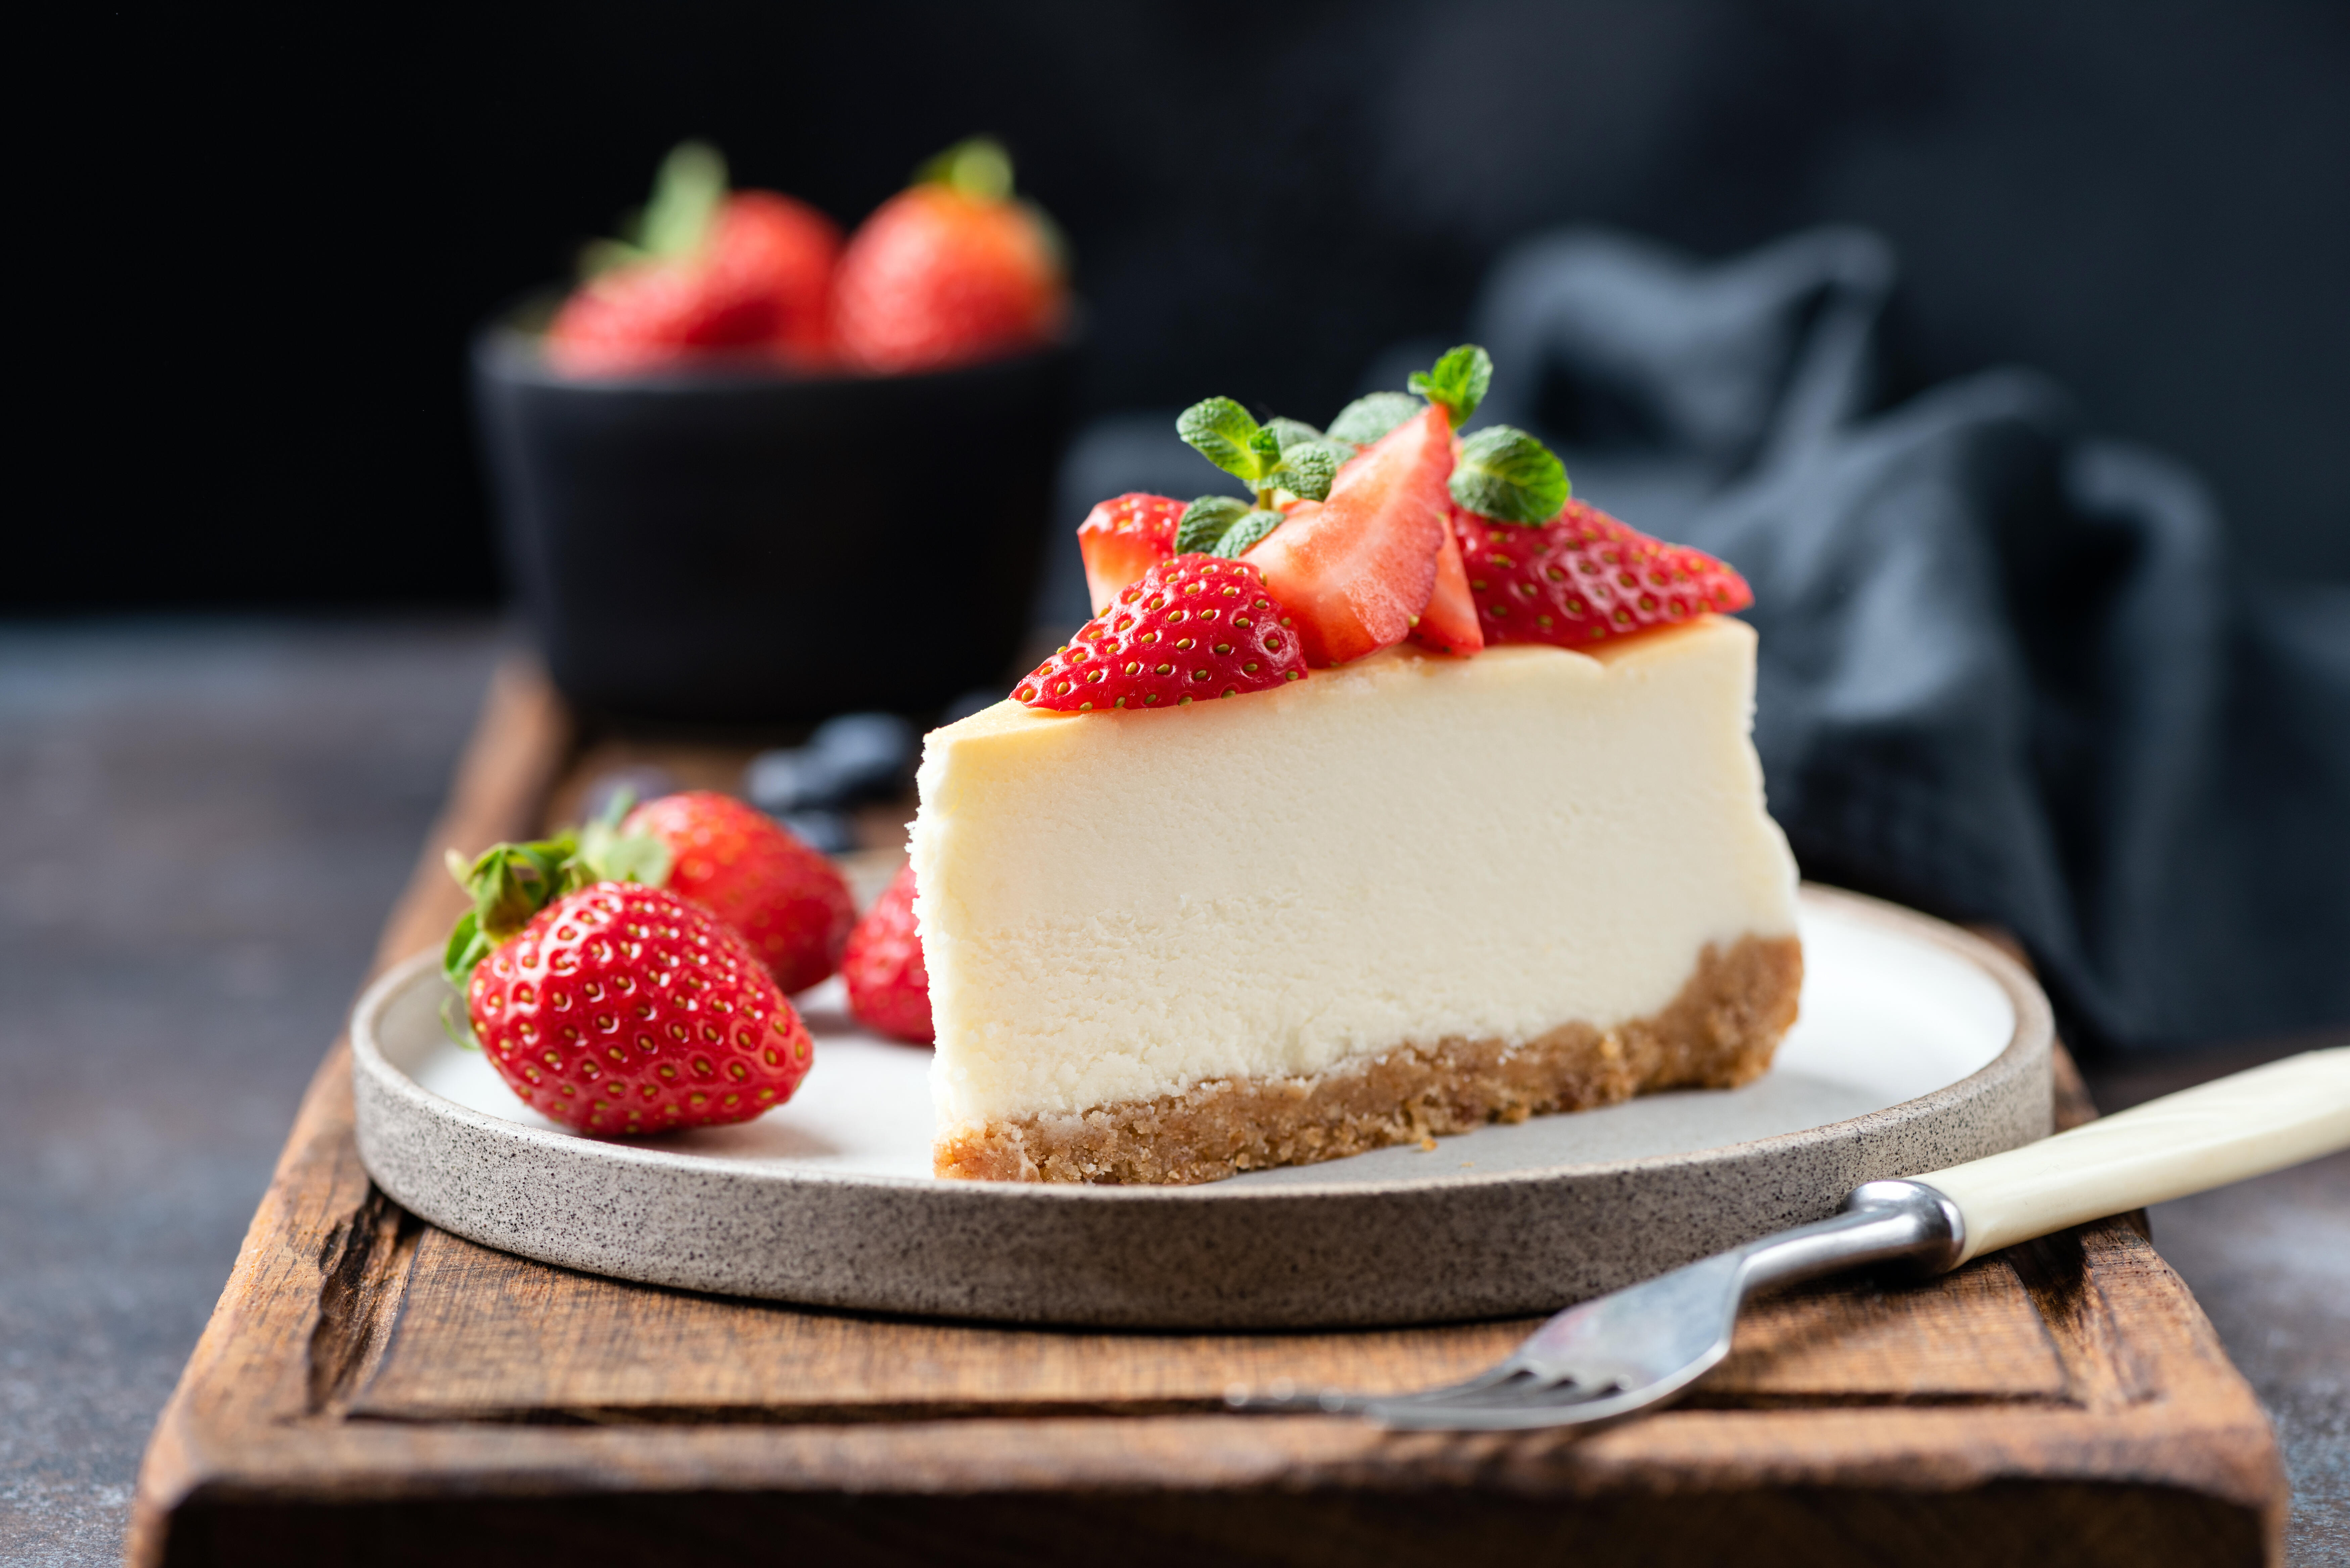 Award-Winning Bakery Serves Washington's Best Cheesecake | iHeart